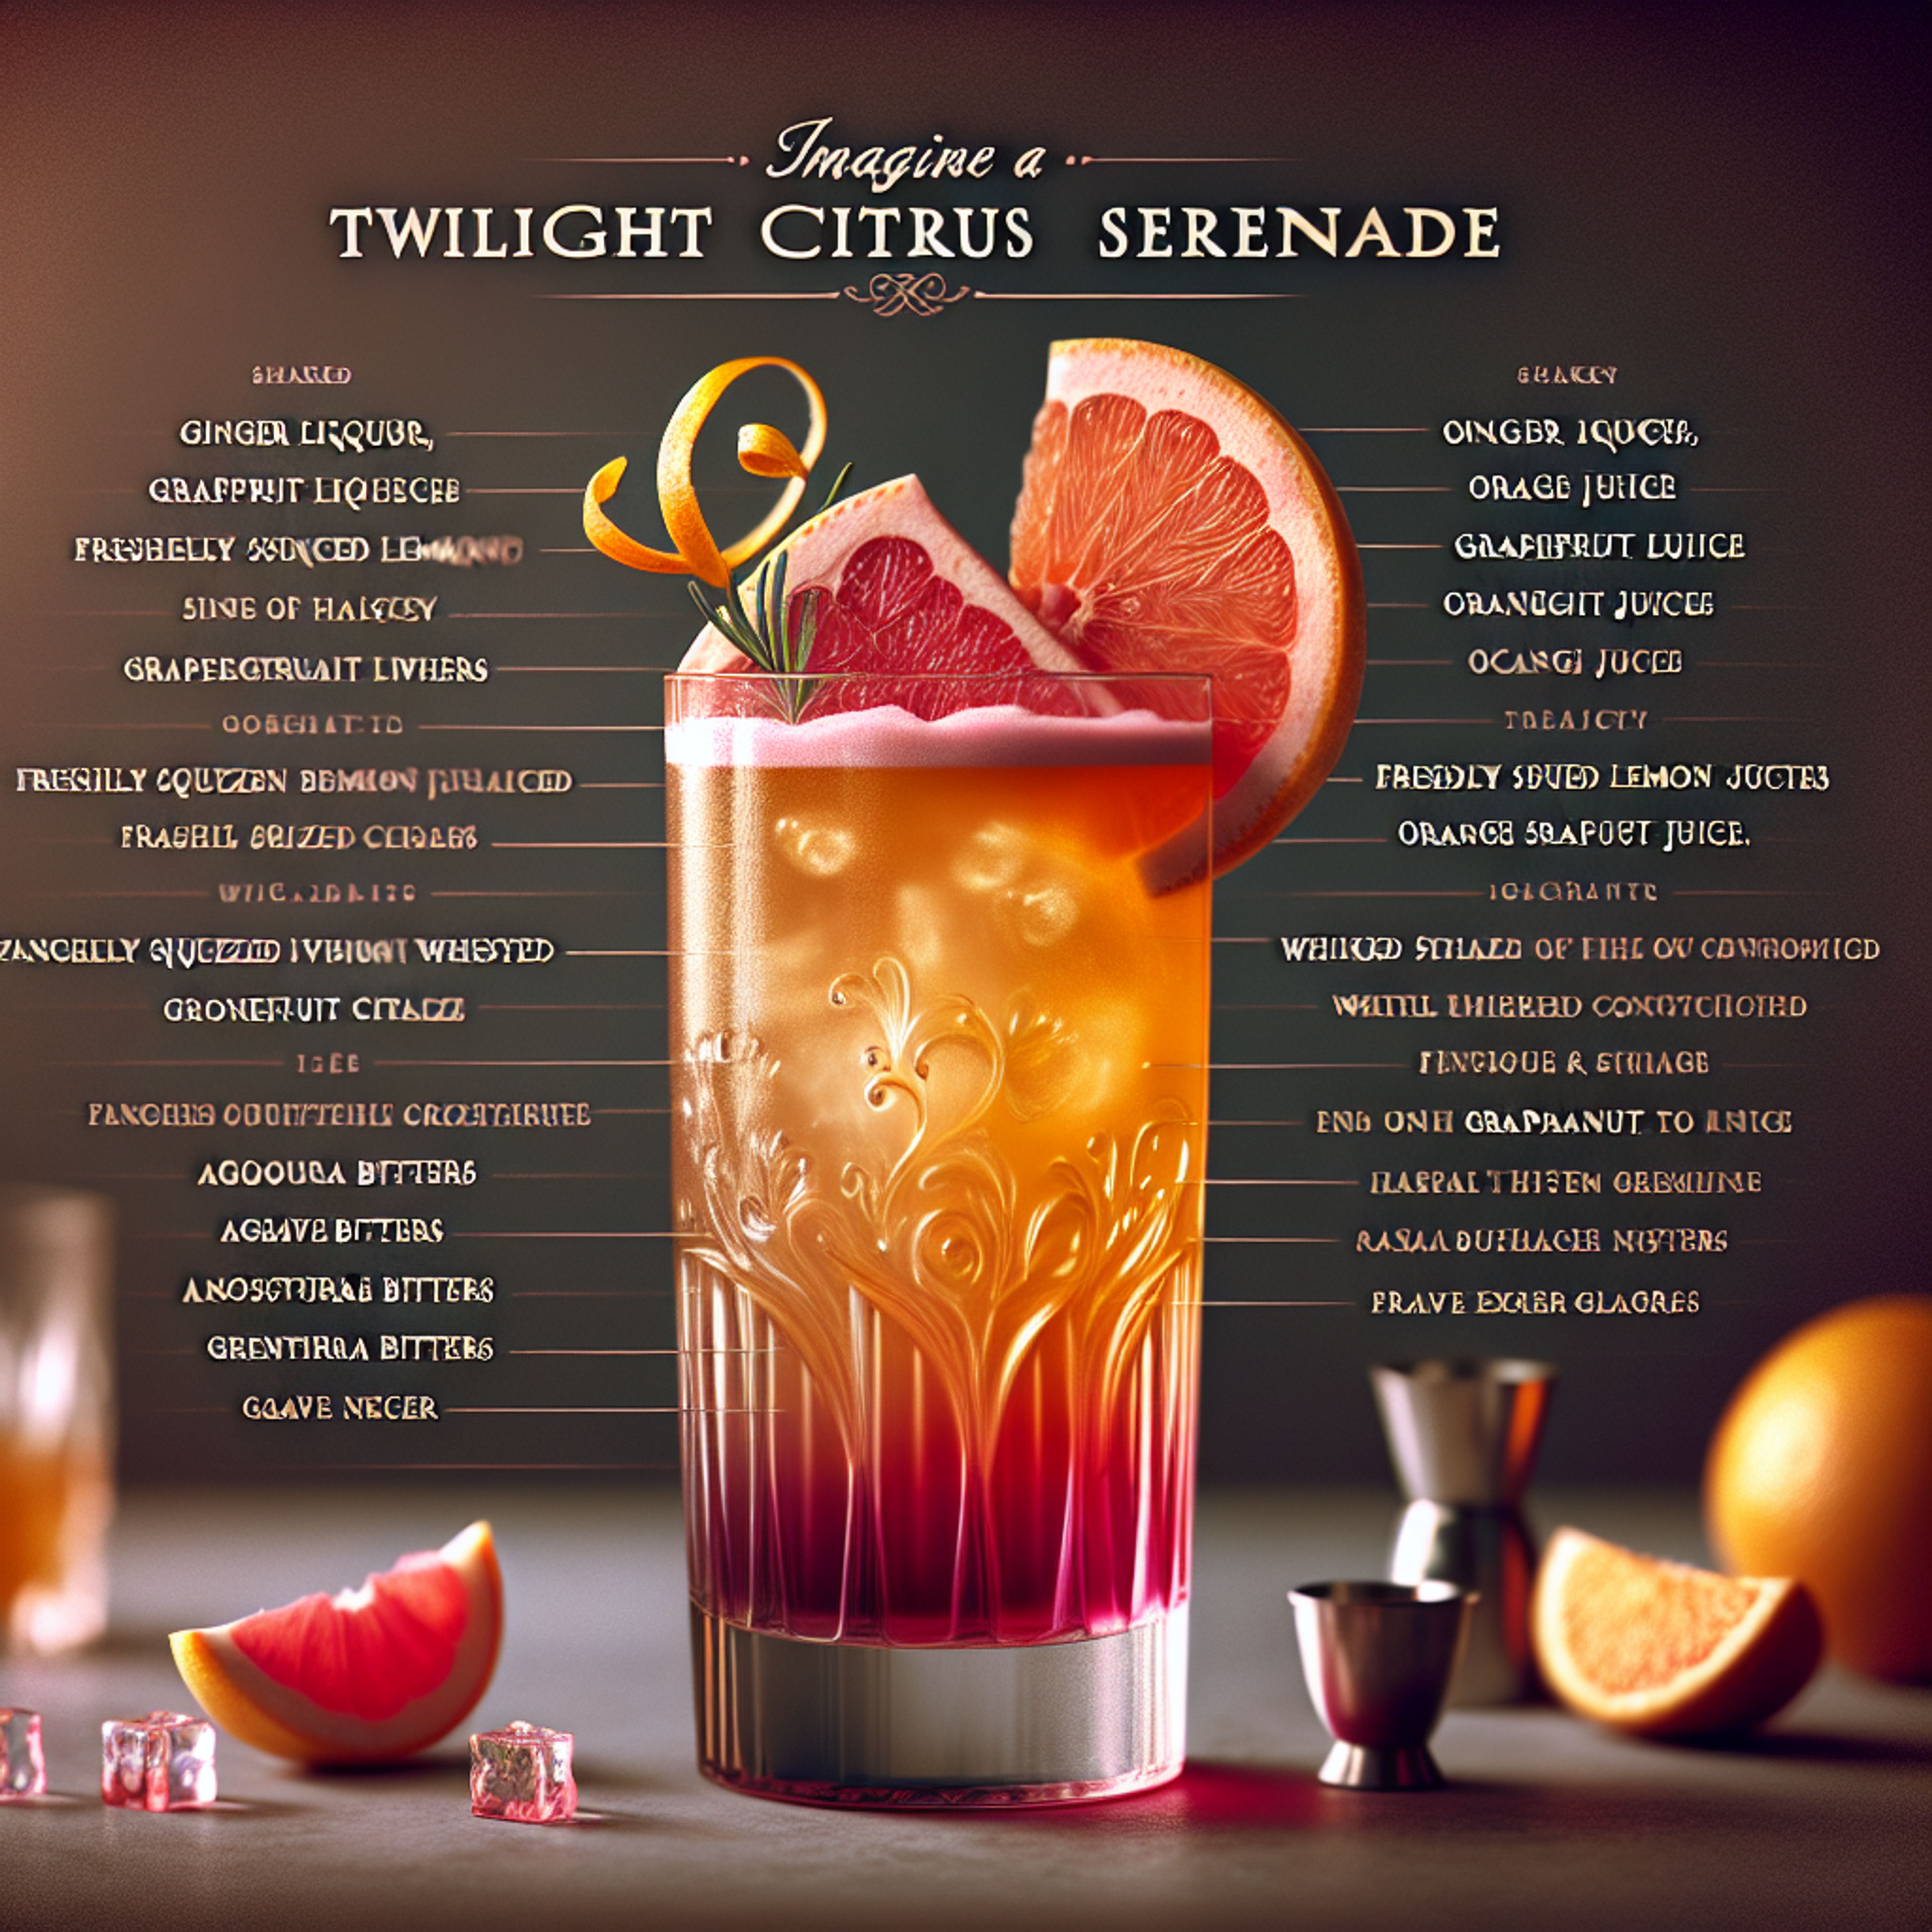 Twilight Citrus Serenade